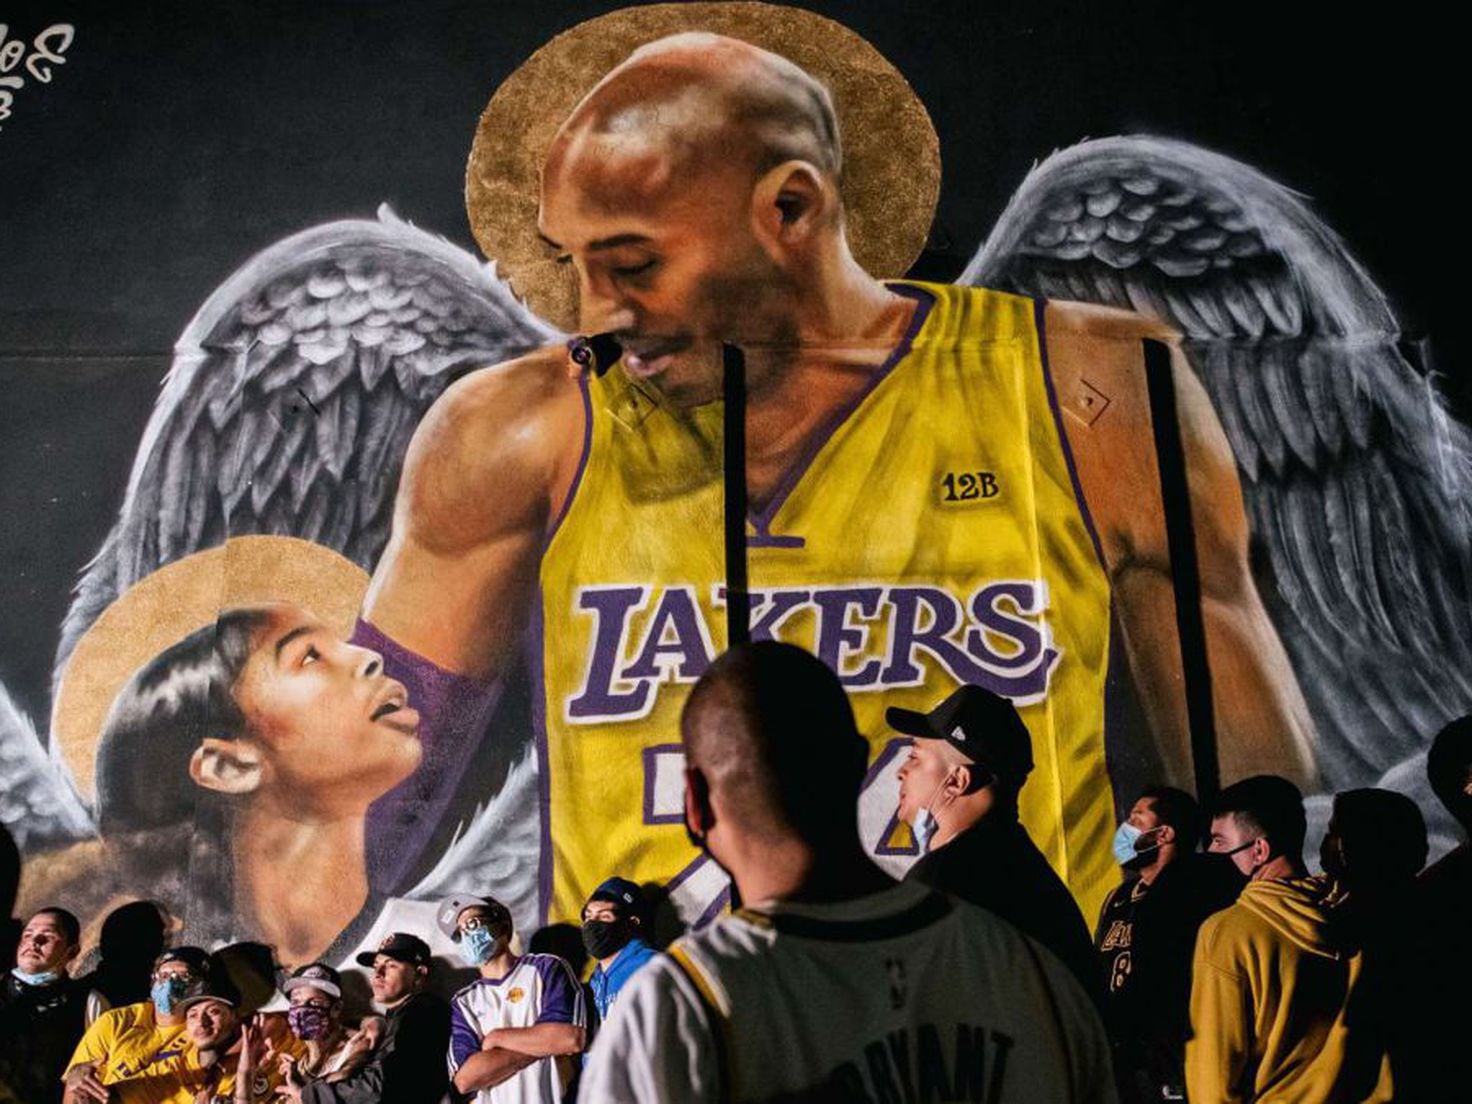 Kobe Bryant, forever in our memories